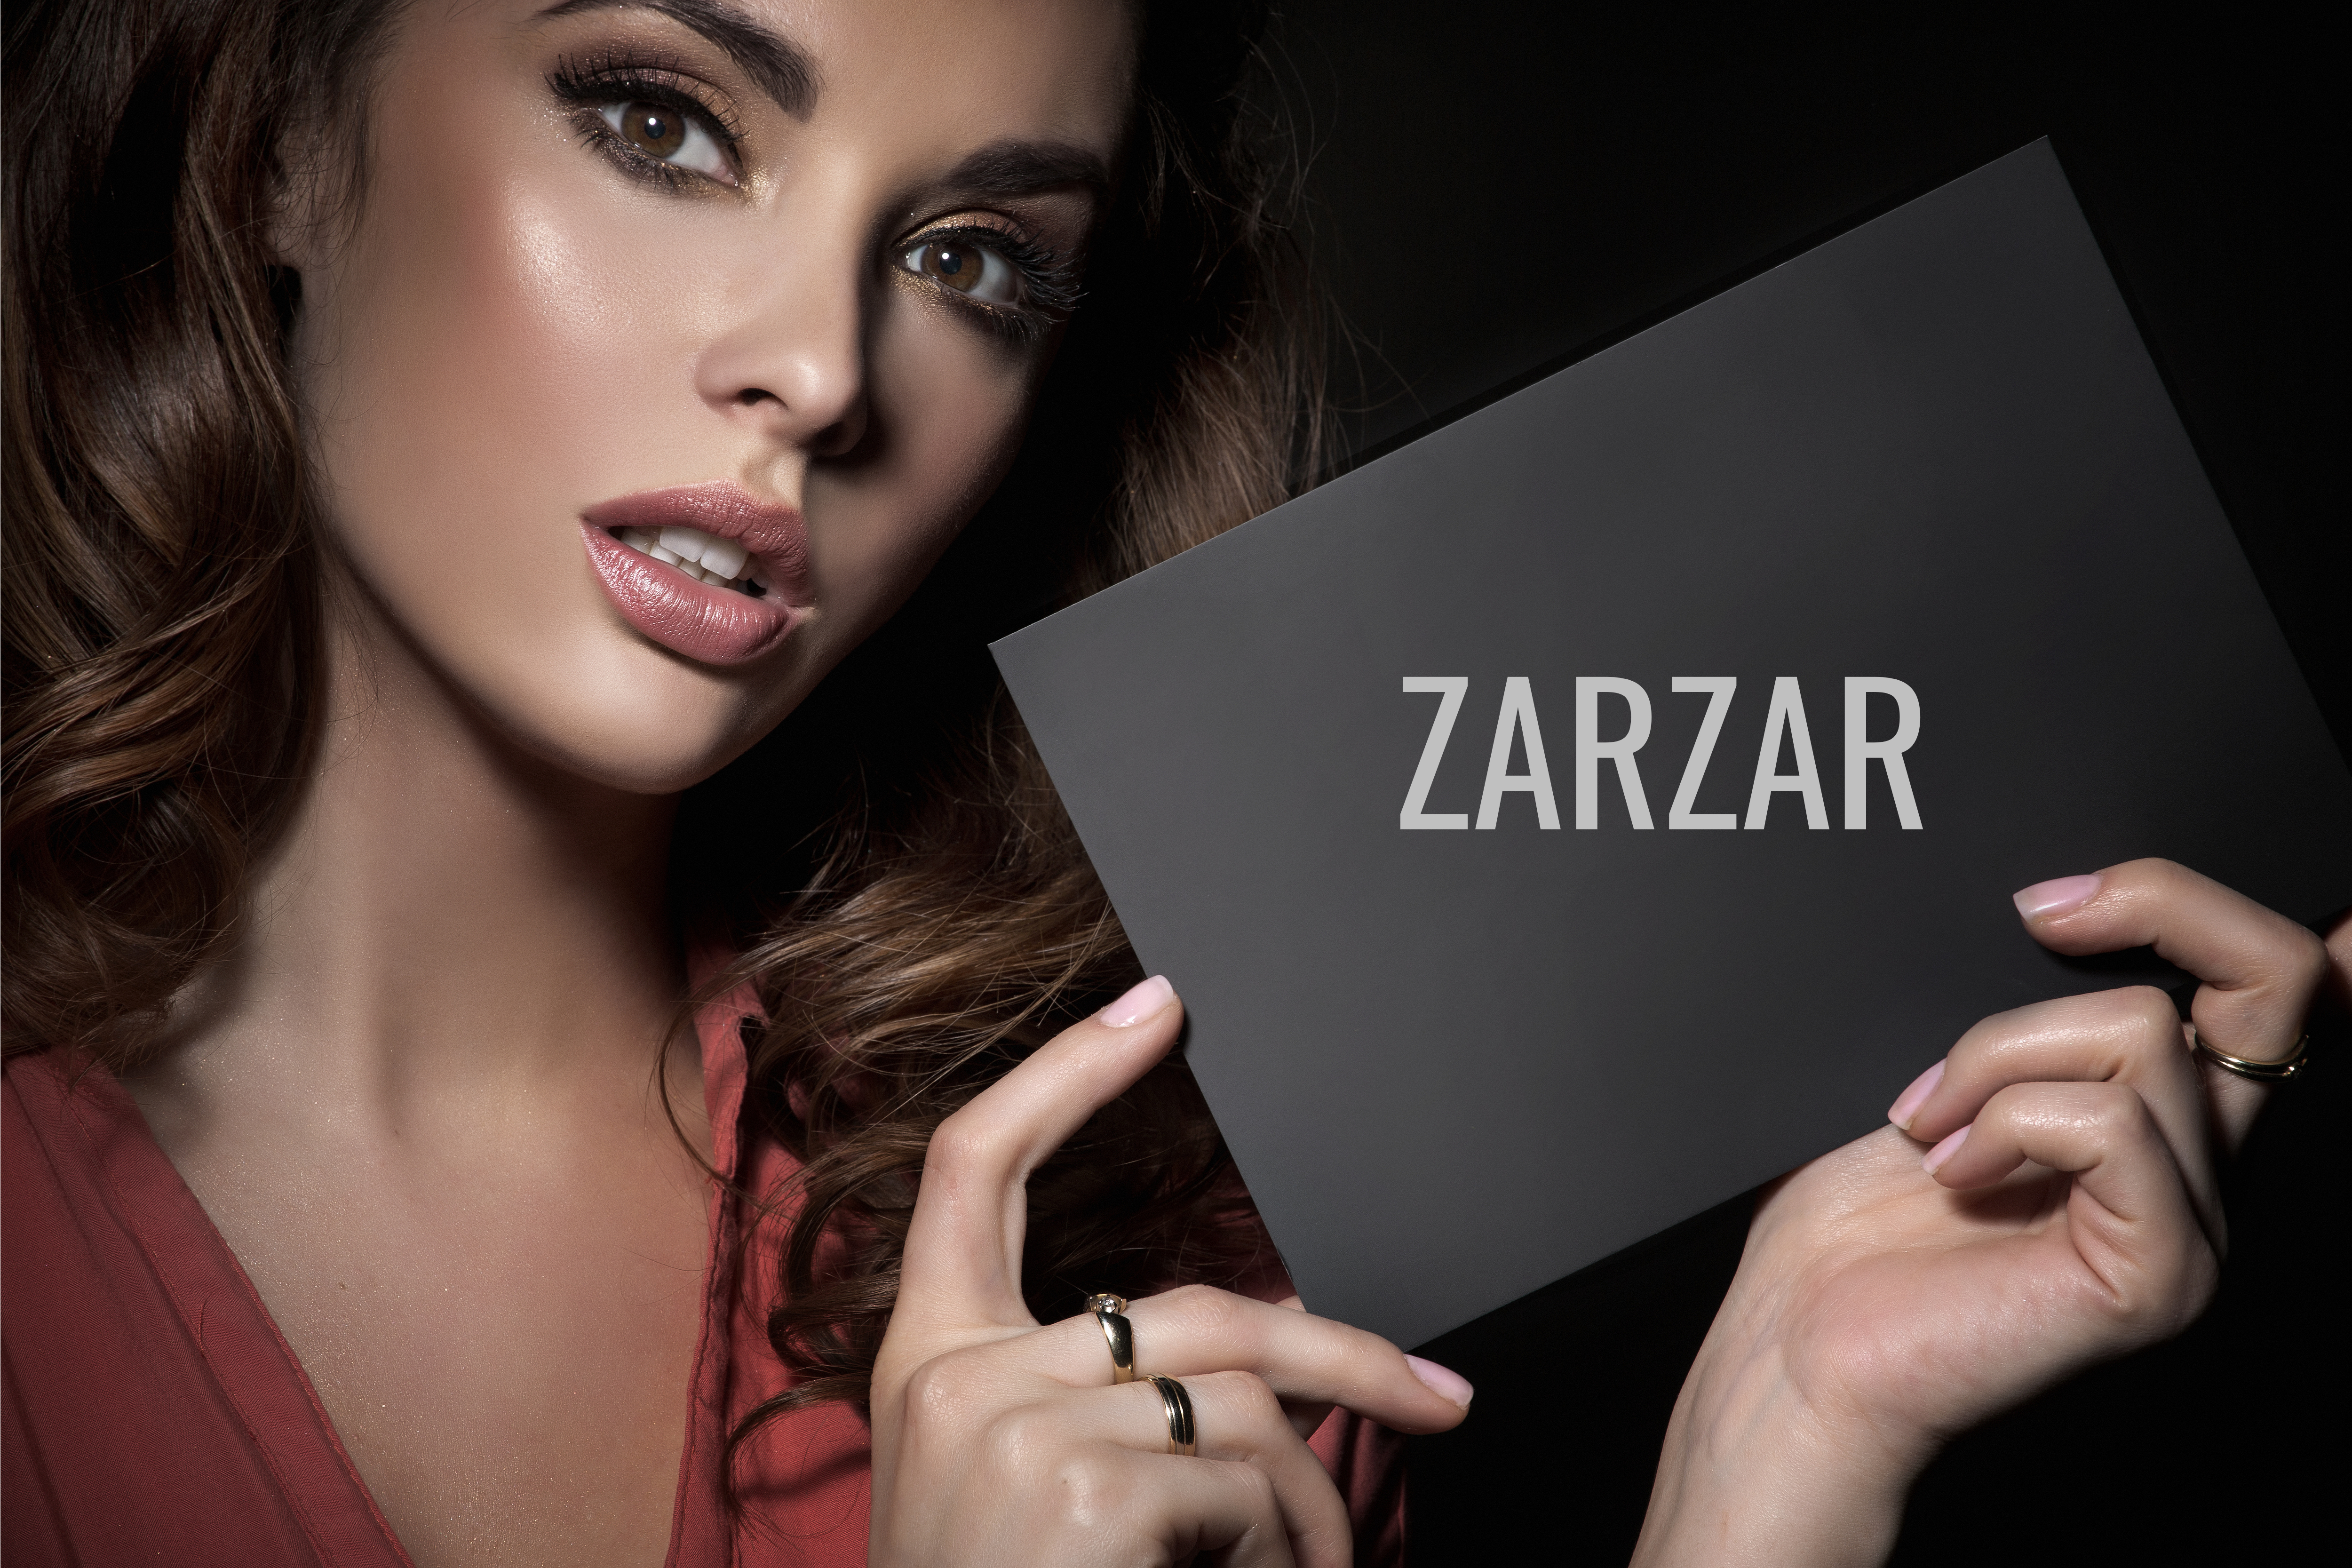 ZARZAR MODELS Makeup Primer Tutorials For Fashion Models. How To Use Makeup Primer For Fashion Models. Beautiful Fashion Model Modeling For Beautiful Makeup Ads And Beautiful Makeup Advertisements.